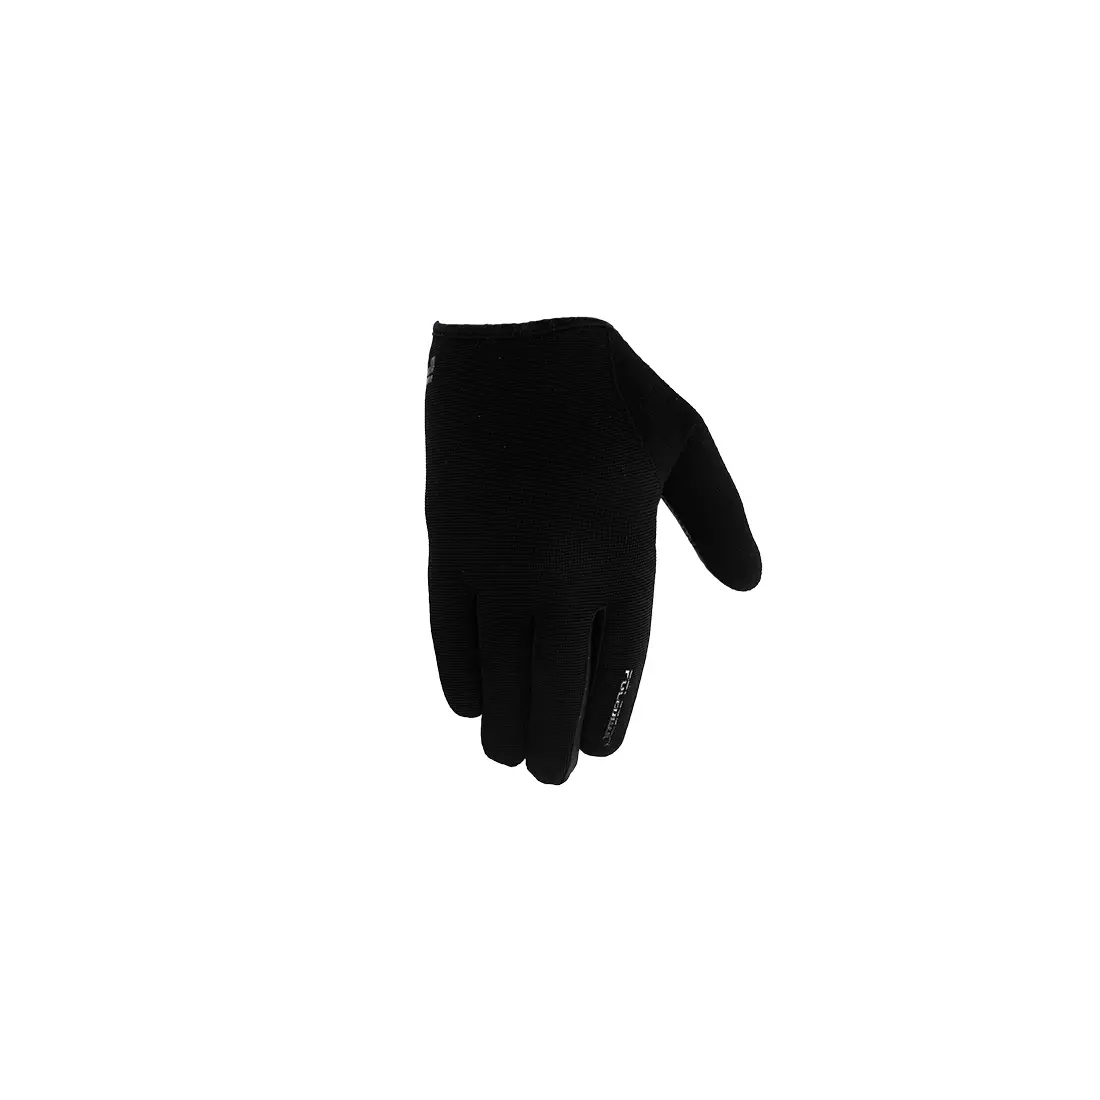 POLEDNIK Handschuhe LANG NEU 17 - schwarz